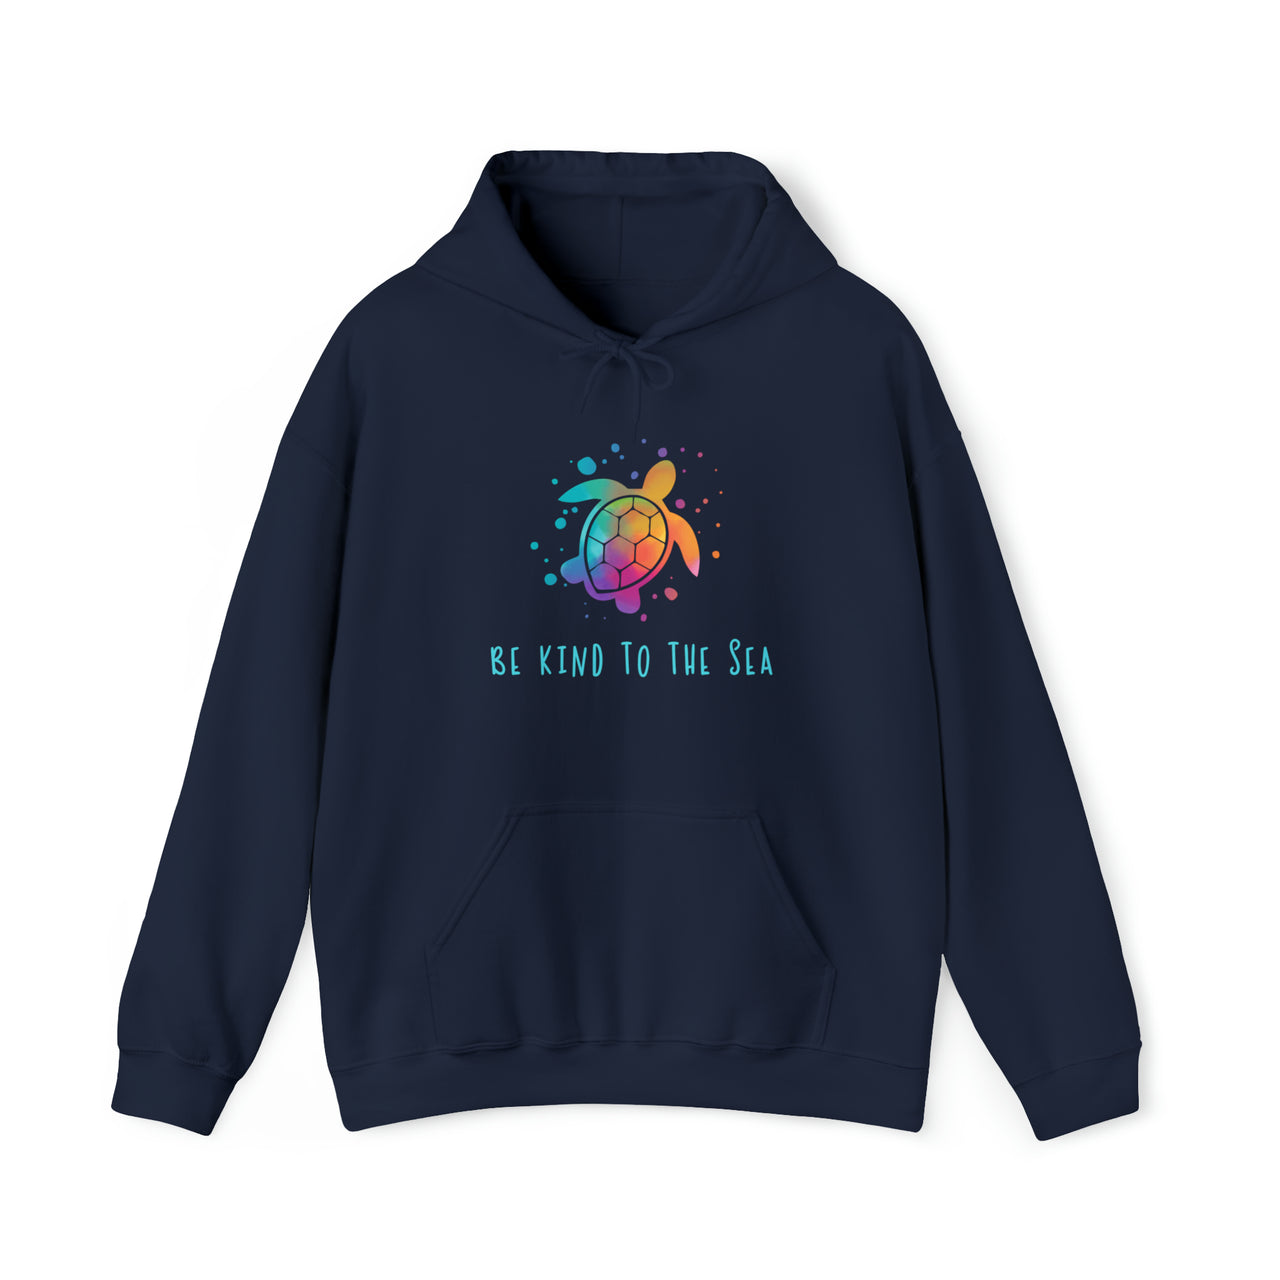 Be Kind to the Sea Hooded Sweatshirt, Unisex, Navy